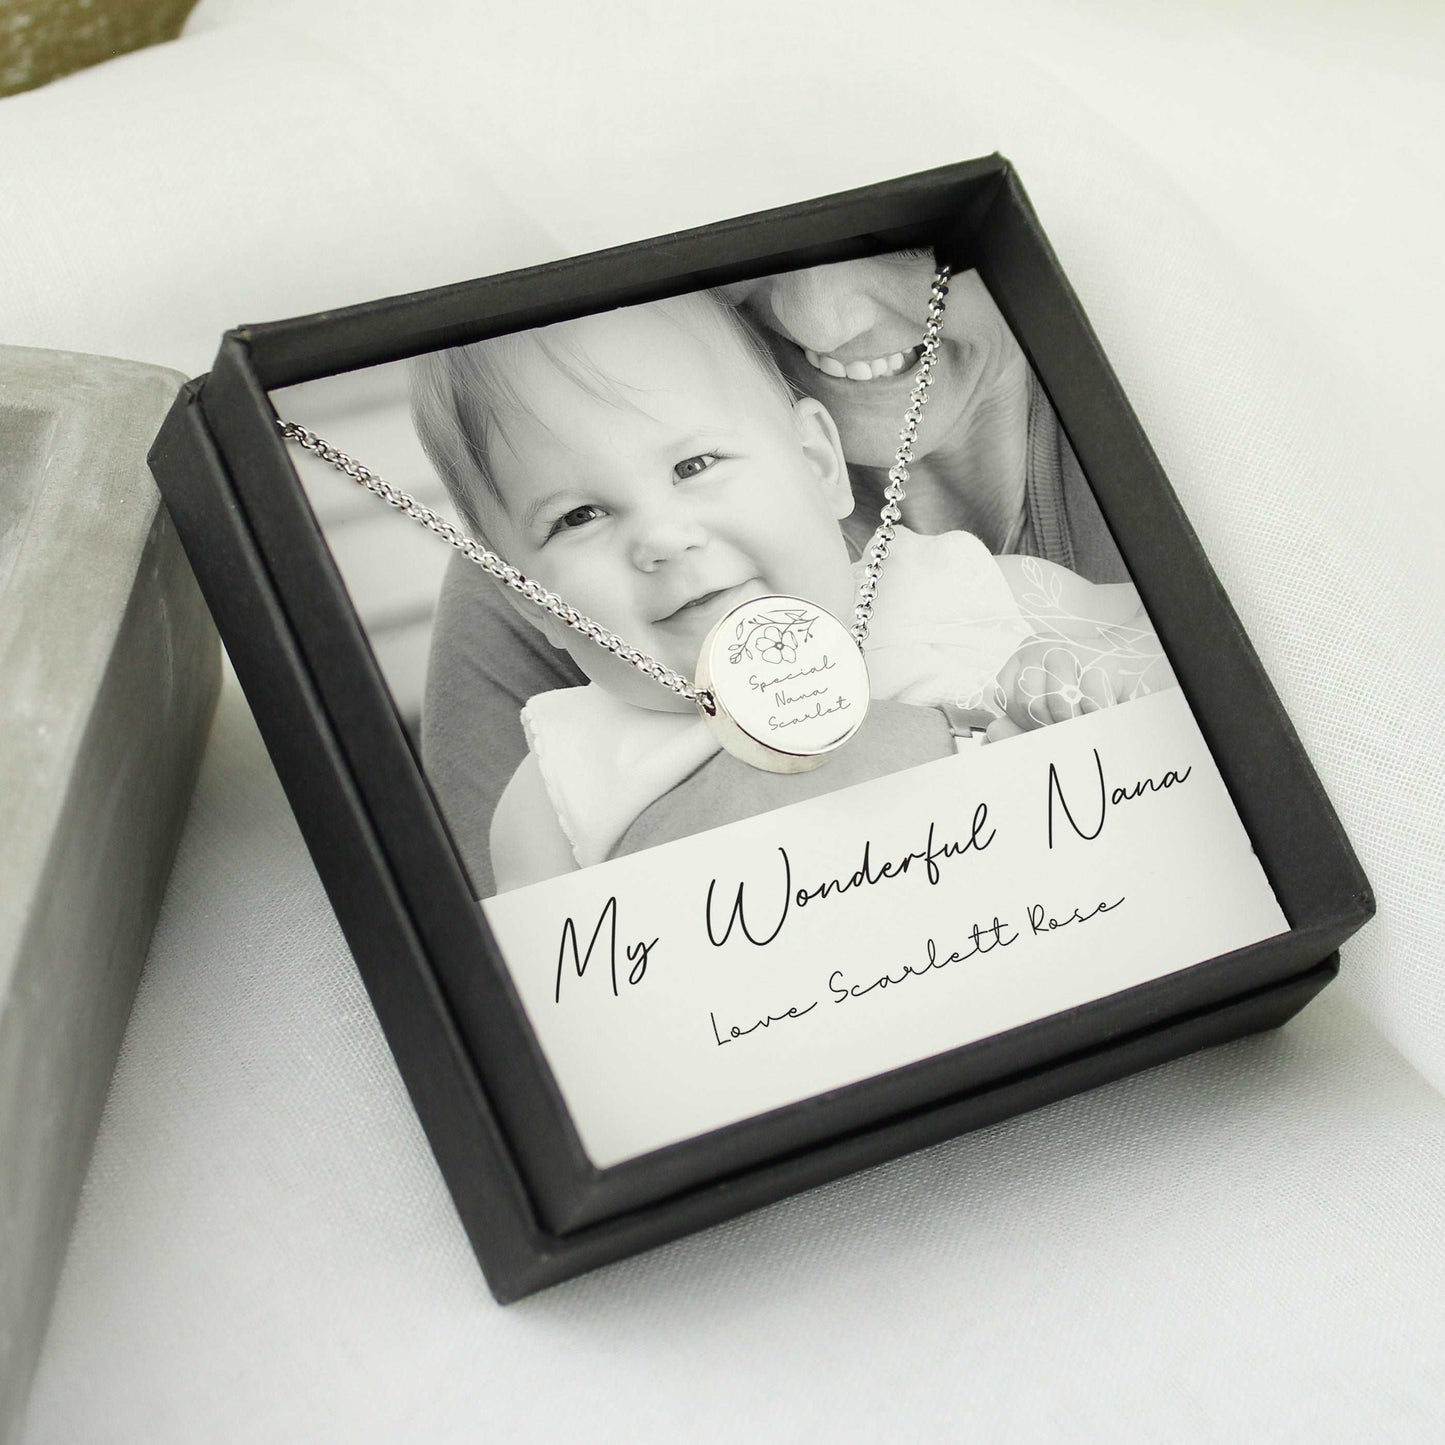 Engraved necklace and photo upload gift box set